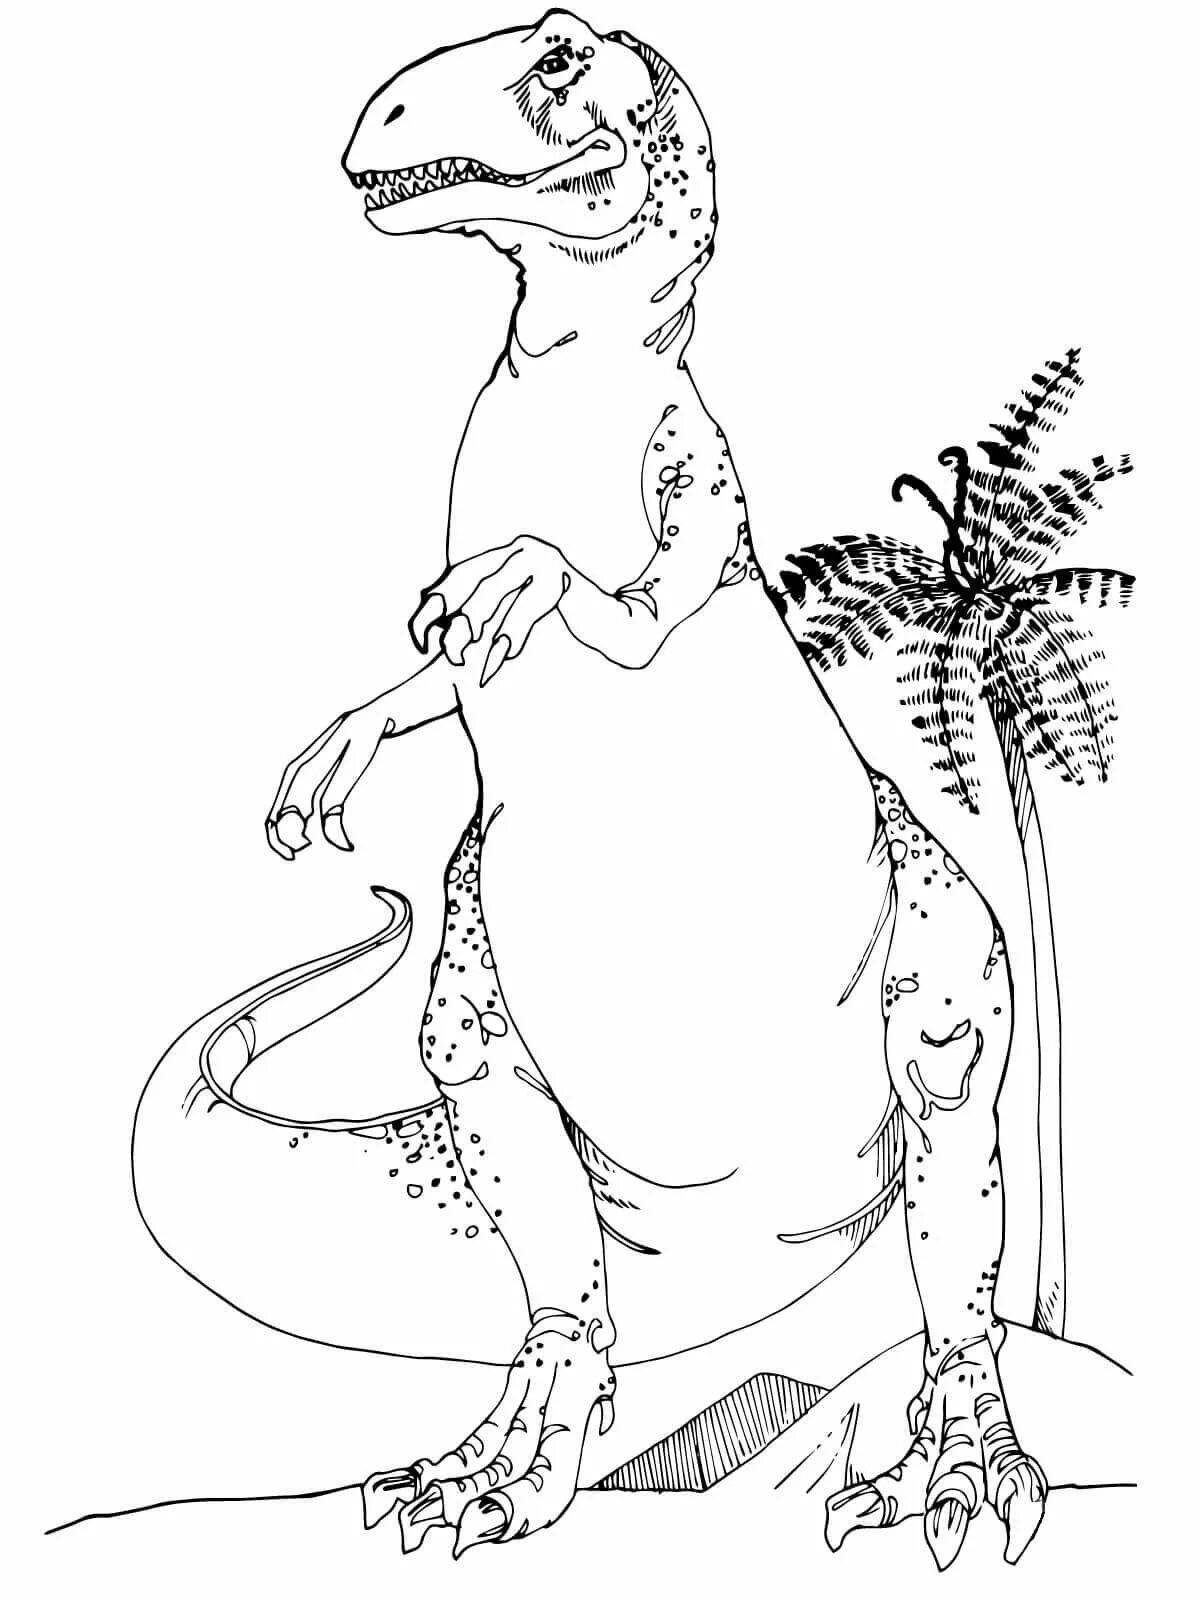 Dinosaur regal allosaurus coloring page